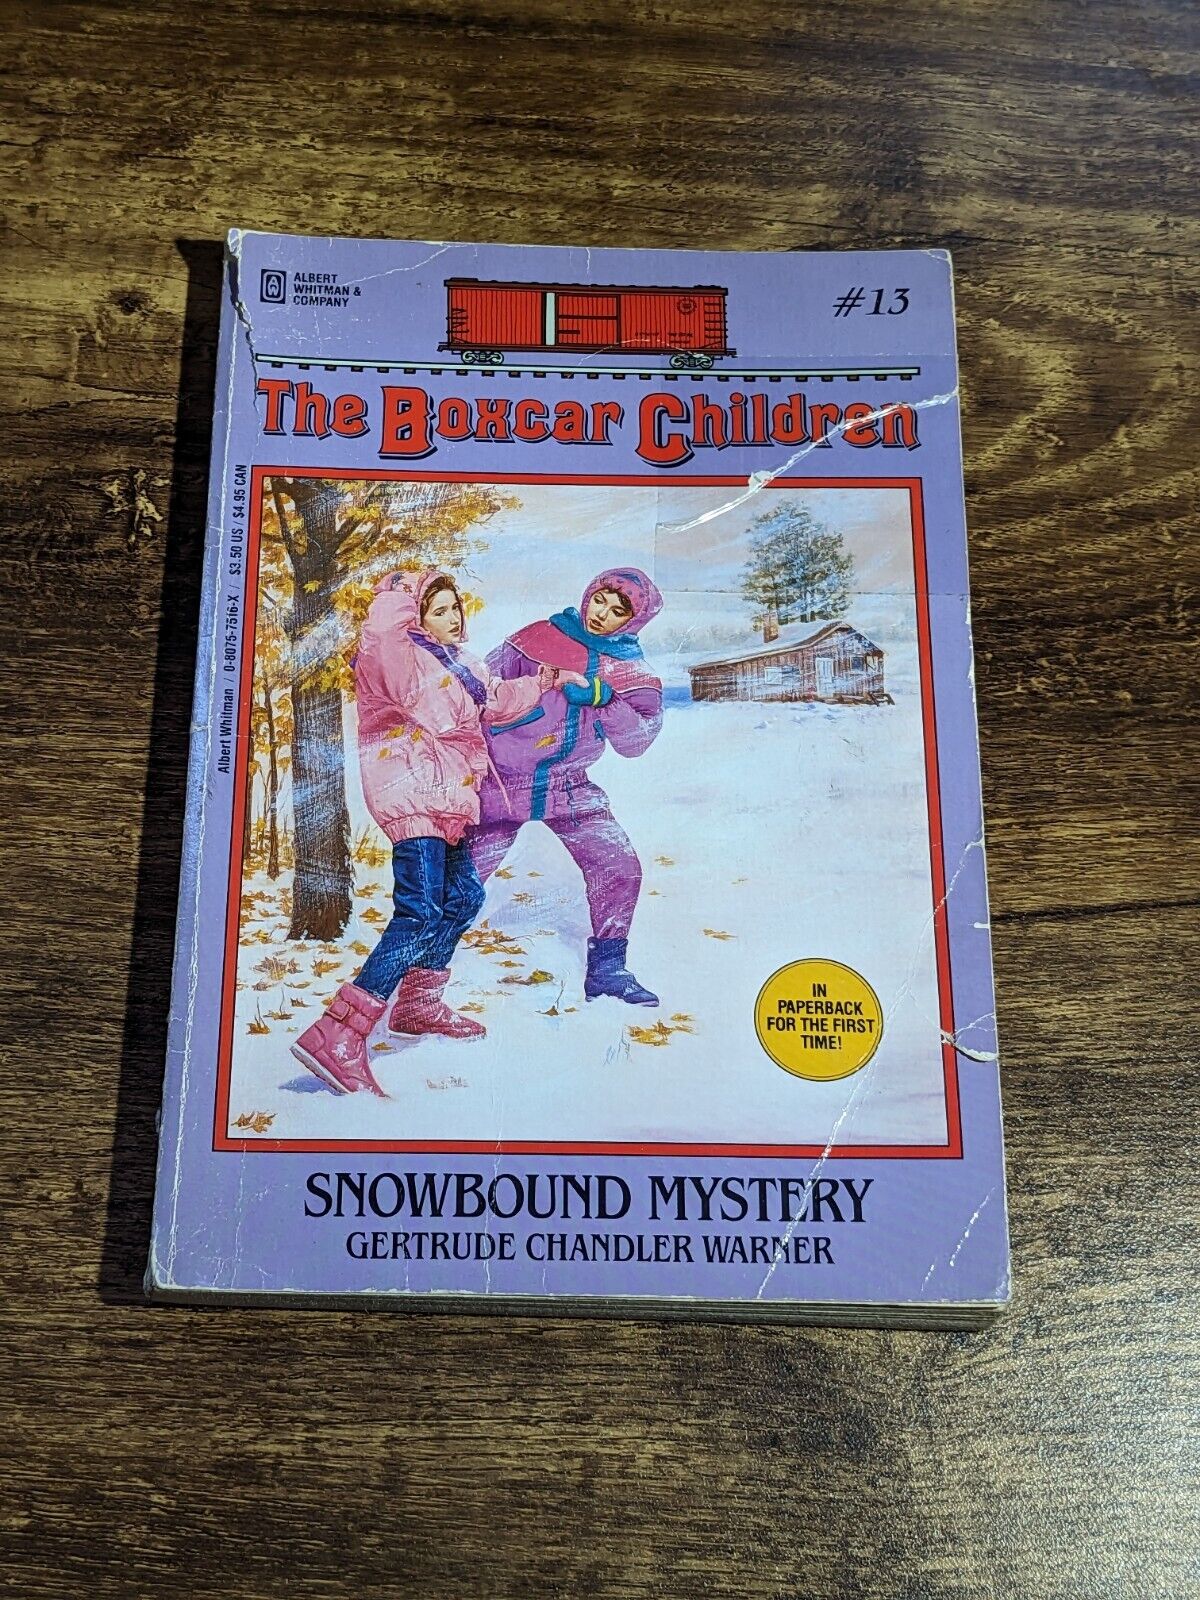 Snowbound Mystery (The Boxcar Children Book #13) Vintage Paperback by Chandler Warner 1990 - Asylum Books